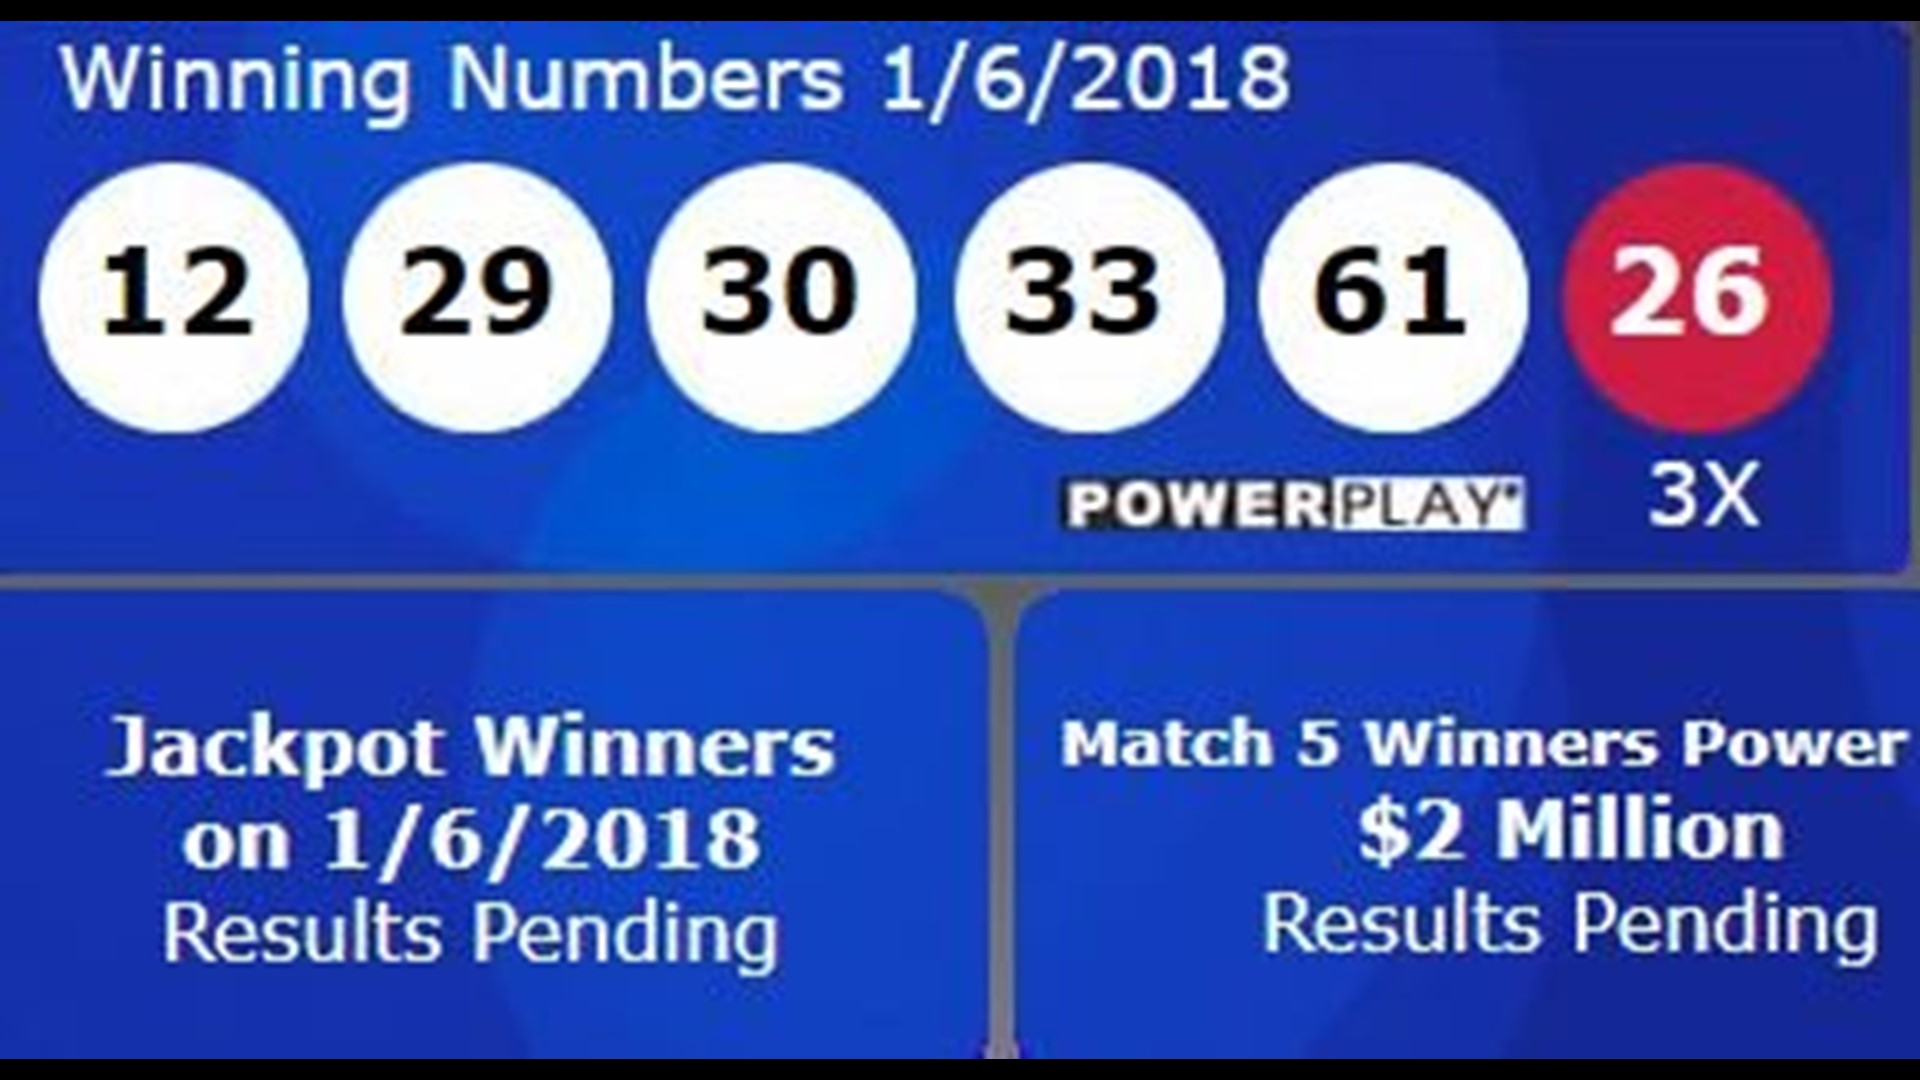 Powerball Winning Numbers: 12, 29, 30, 33, 61 And Powerball 26